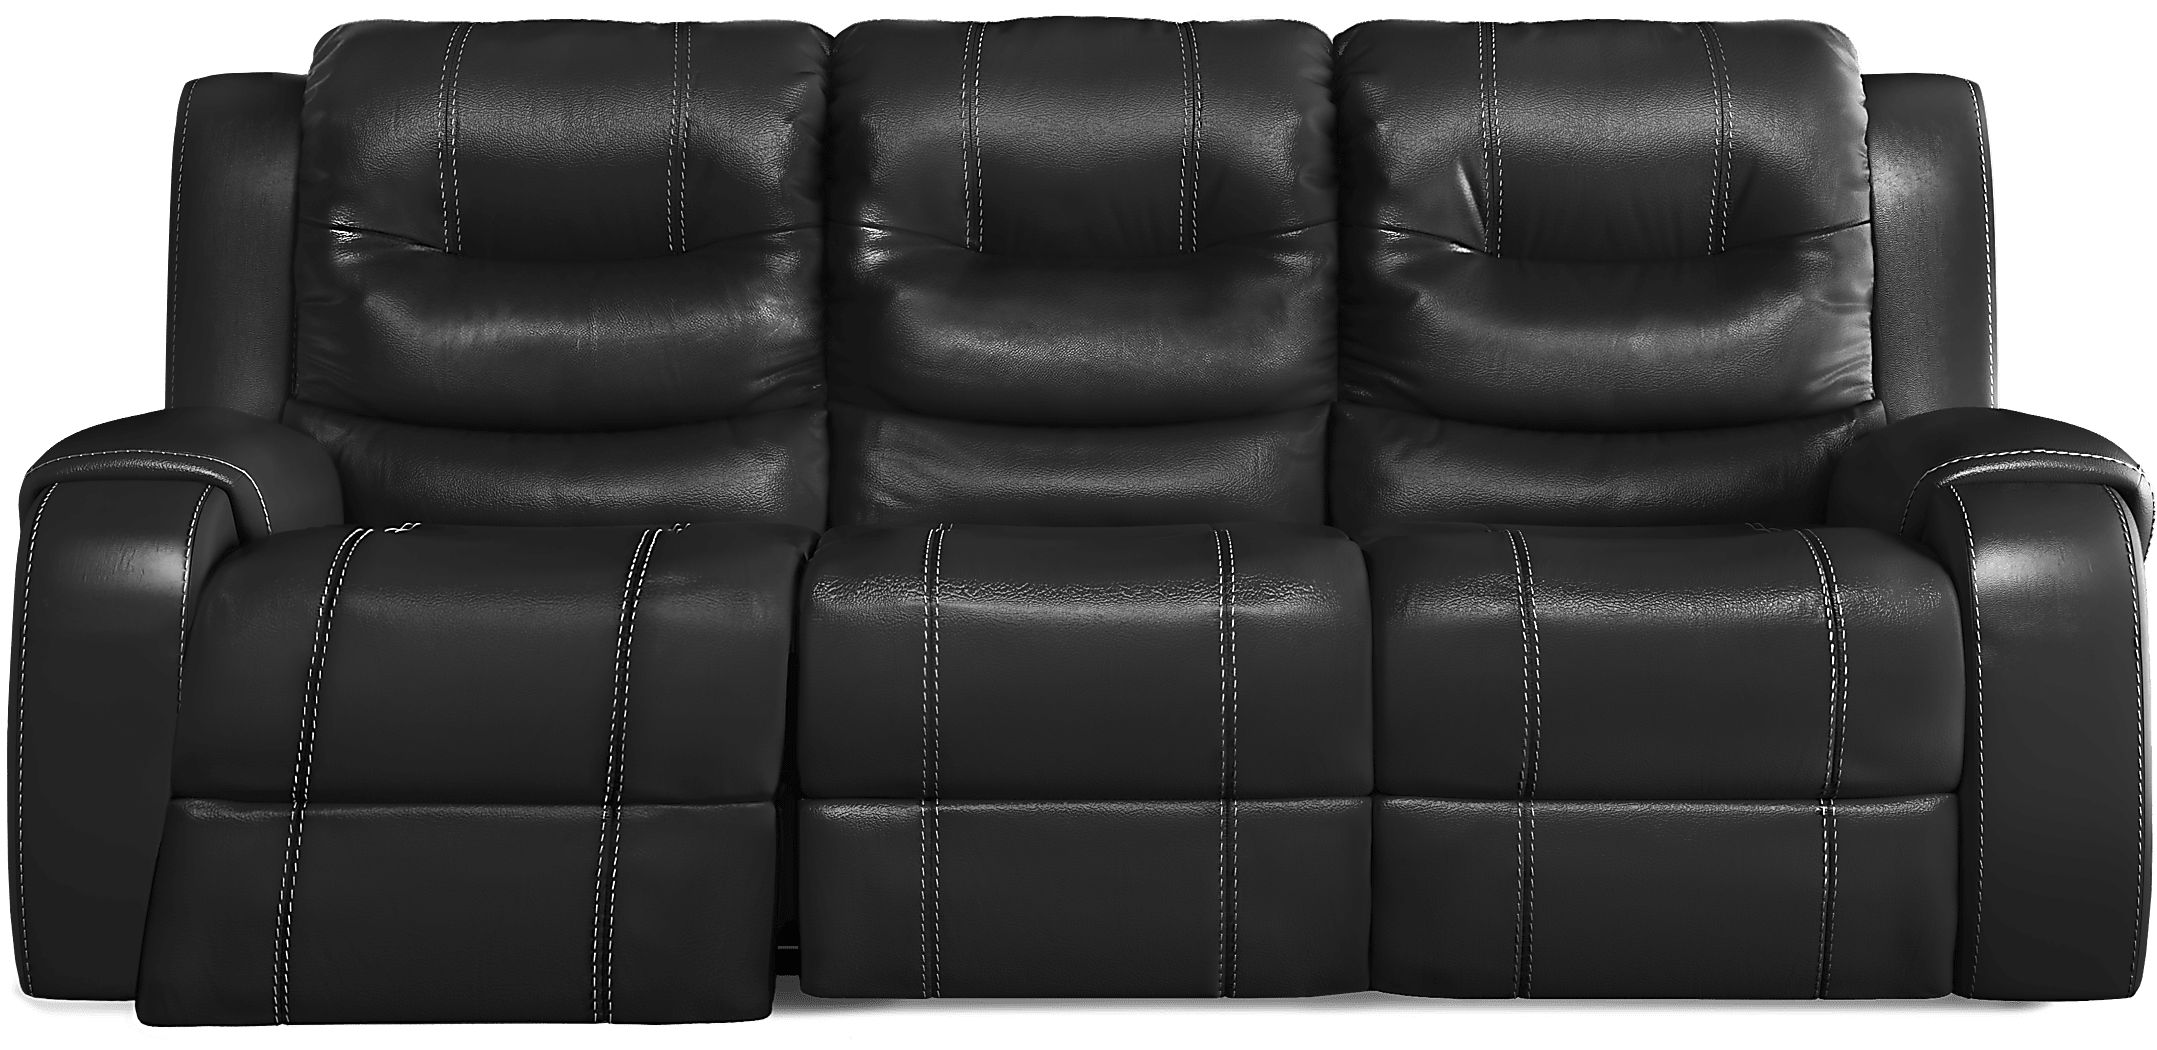 High Plains Black Leather Reclining Sofa